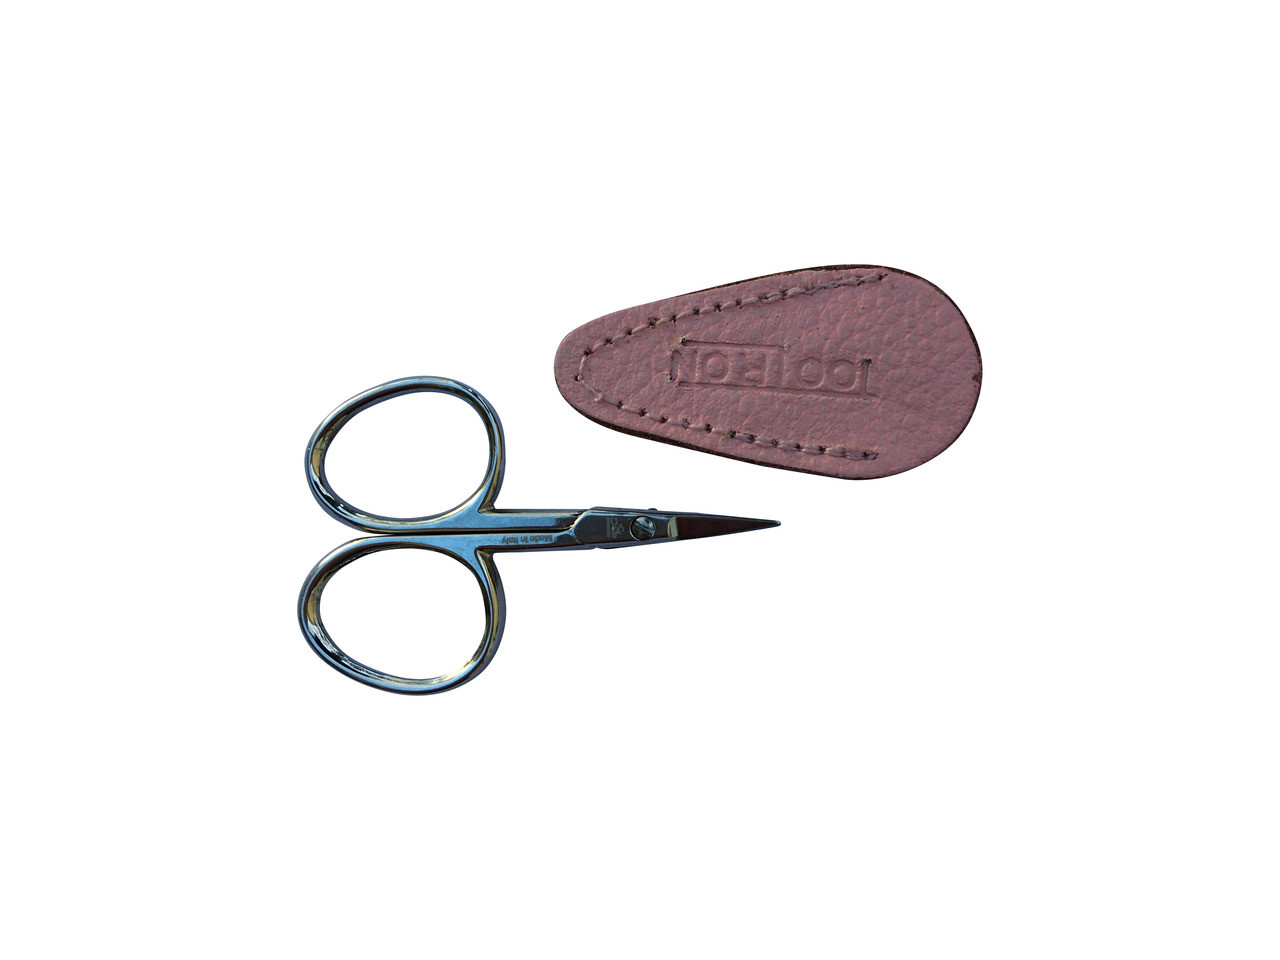 Patchwork Scissors (Small)